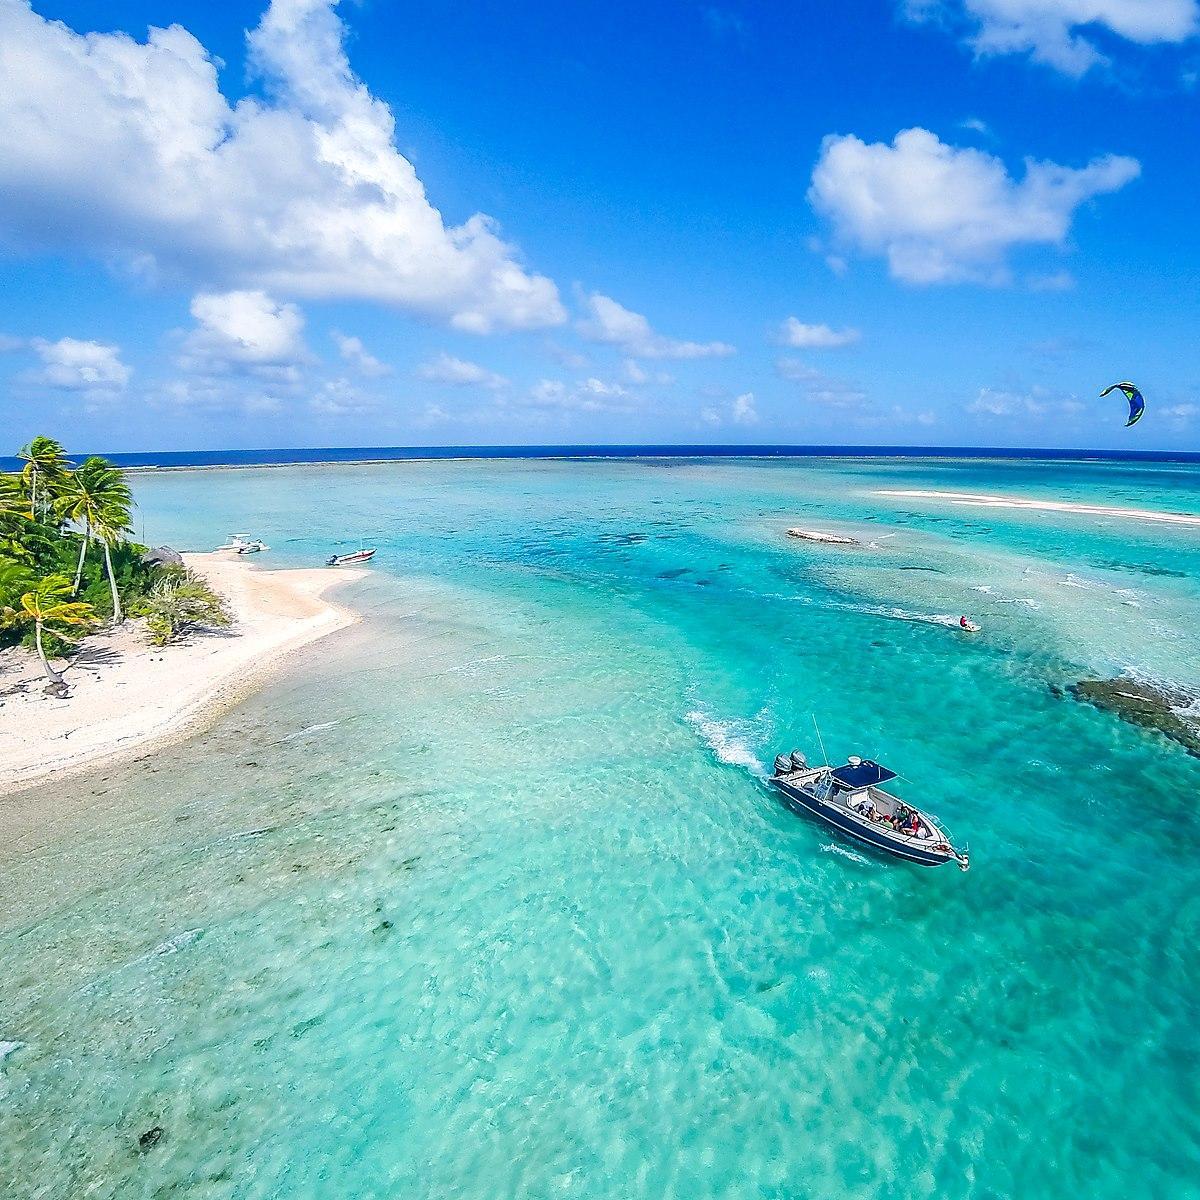 Private island resort for luxury seeking adventurers.  Tikehau Atoll north of Tahiti. Artisan bungalows, gourmet cuisine, watersports, natural beauty